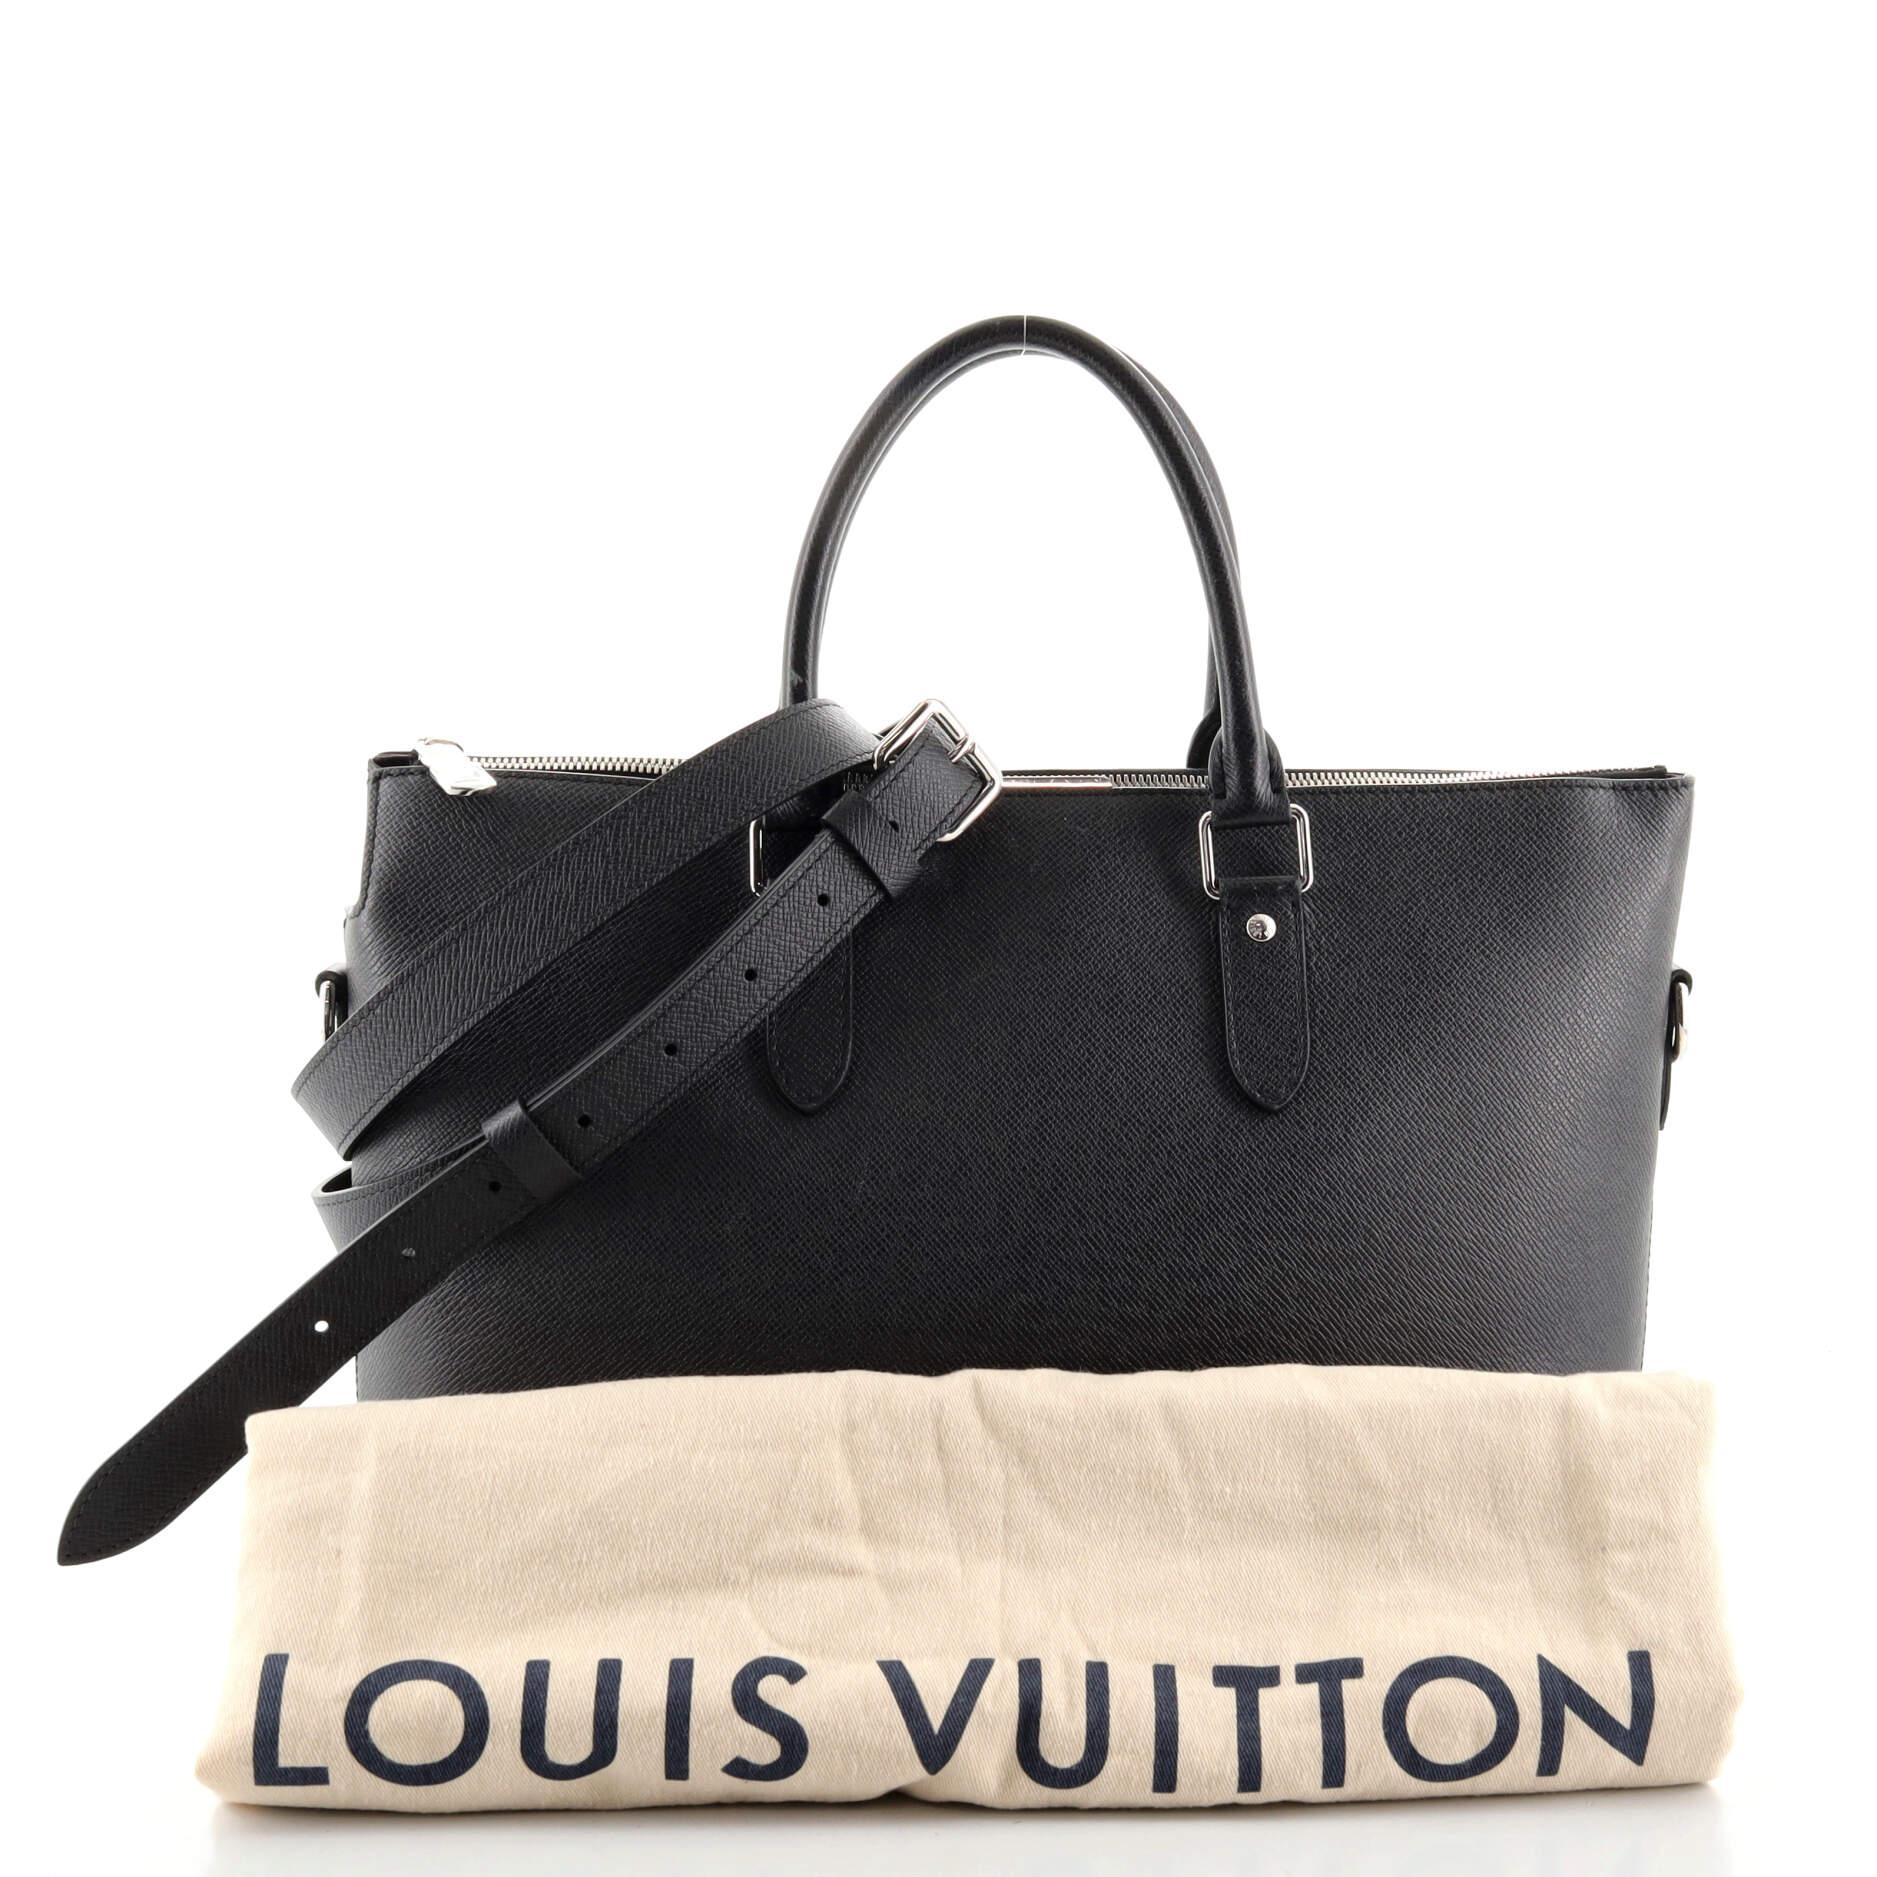 Anton Briefcase Louis Vuitton - For Sale on 1stDibs  louis vuitton anton  briefcase, louis vuitton briefcase explorer